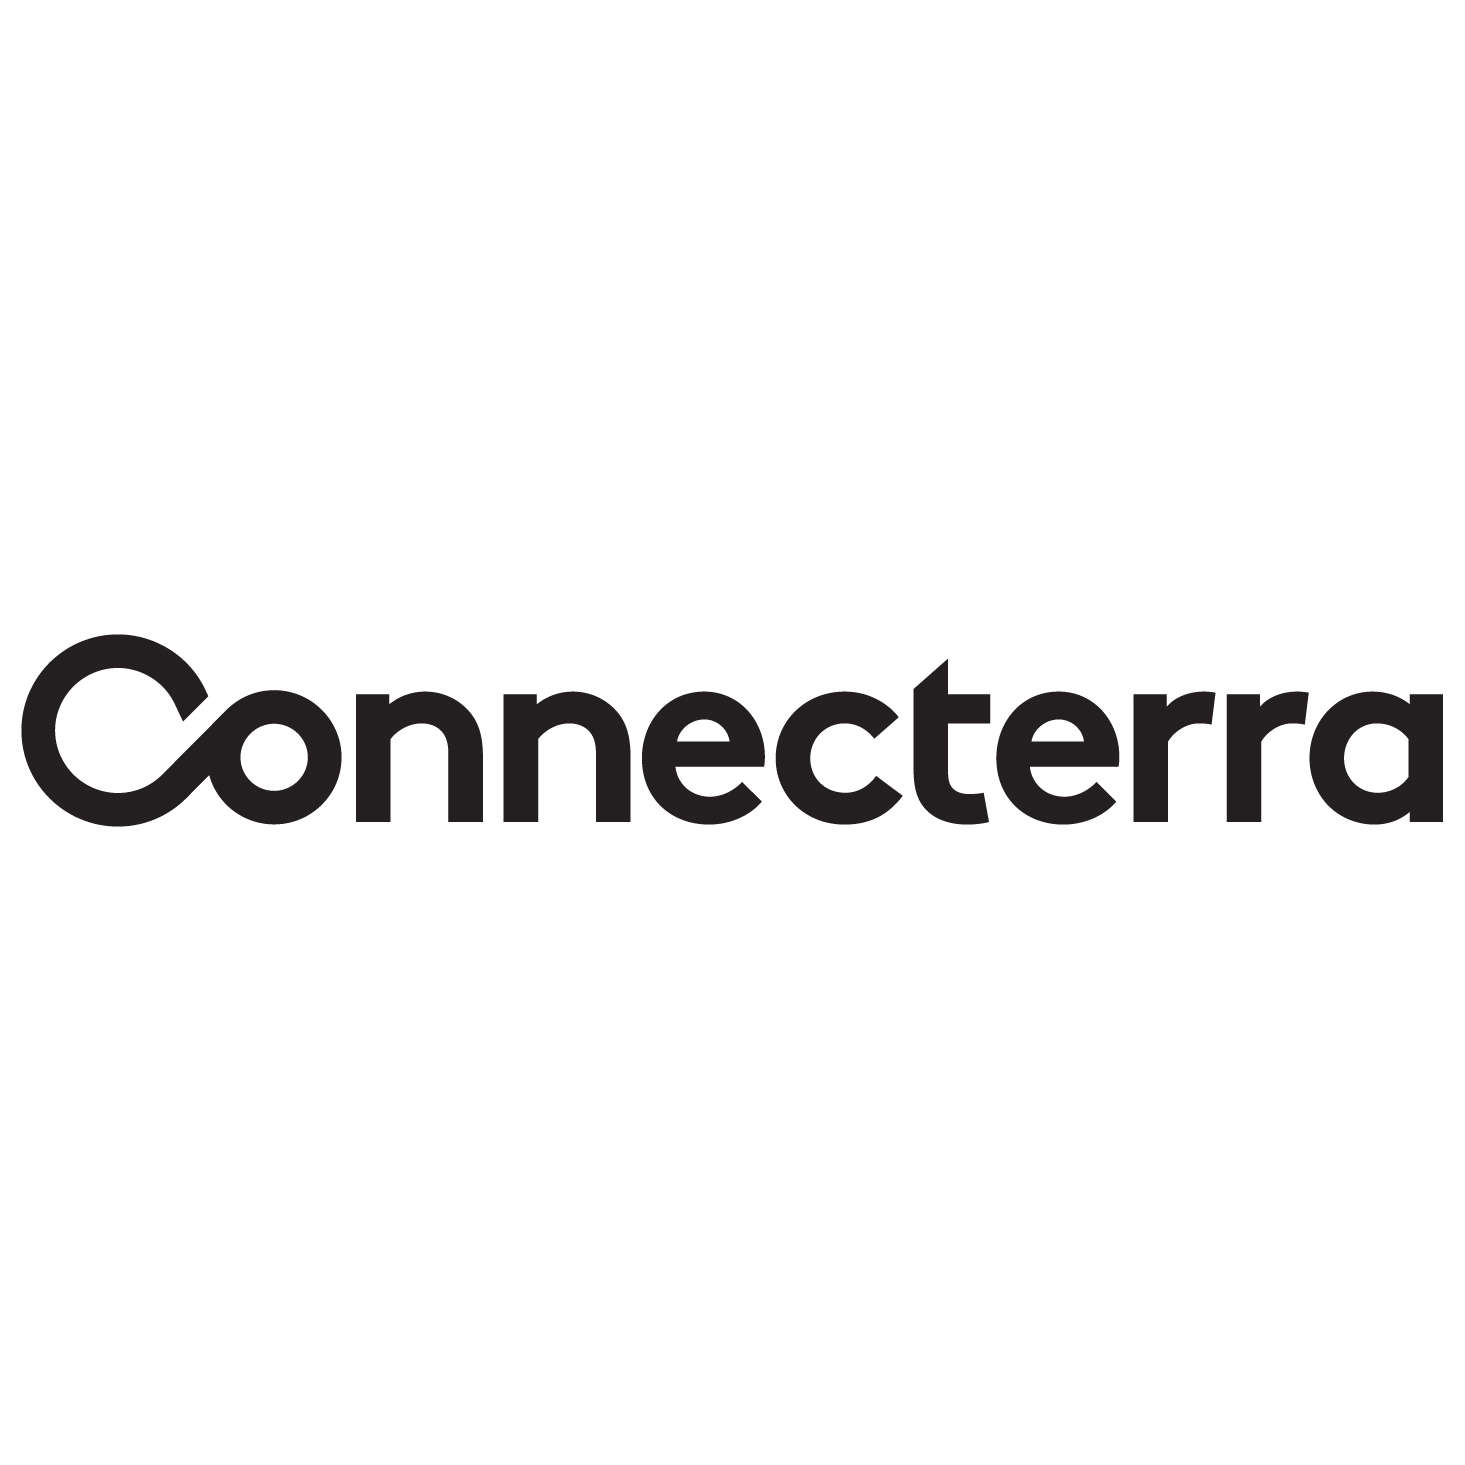 Connecterra - Crunchbase Company Profile & Funding